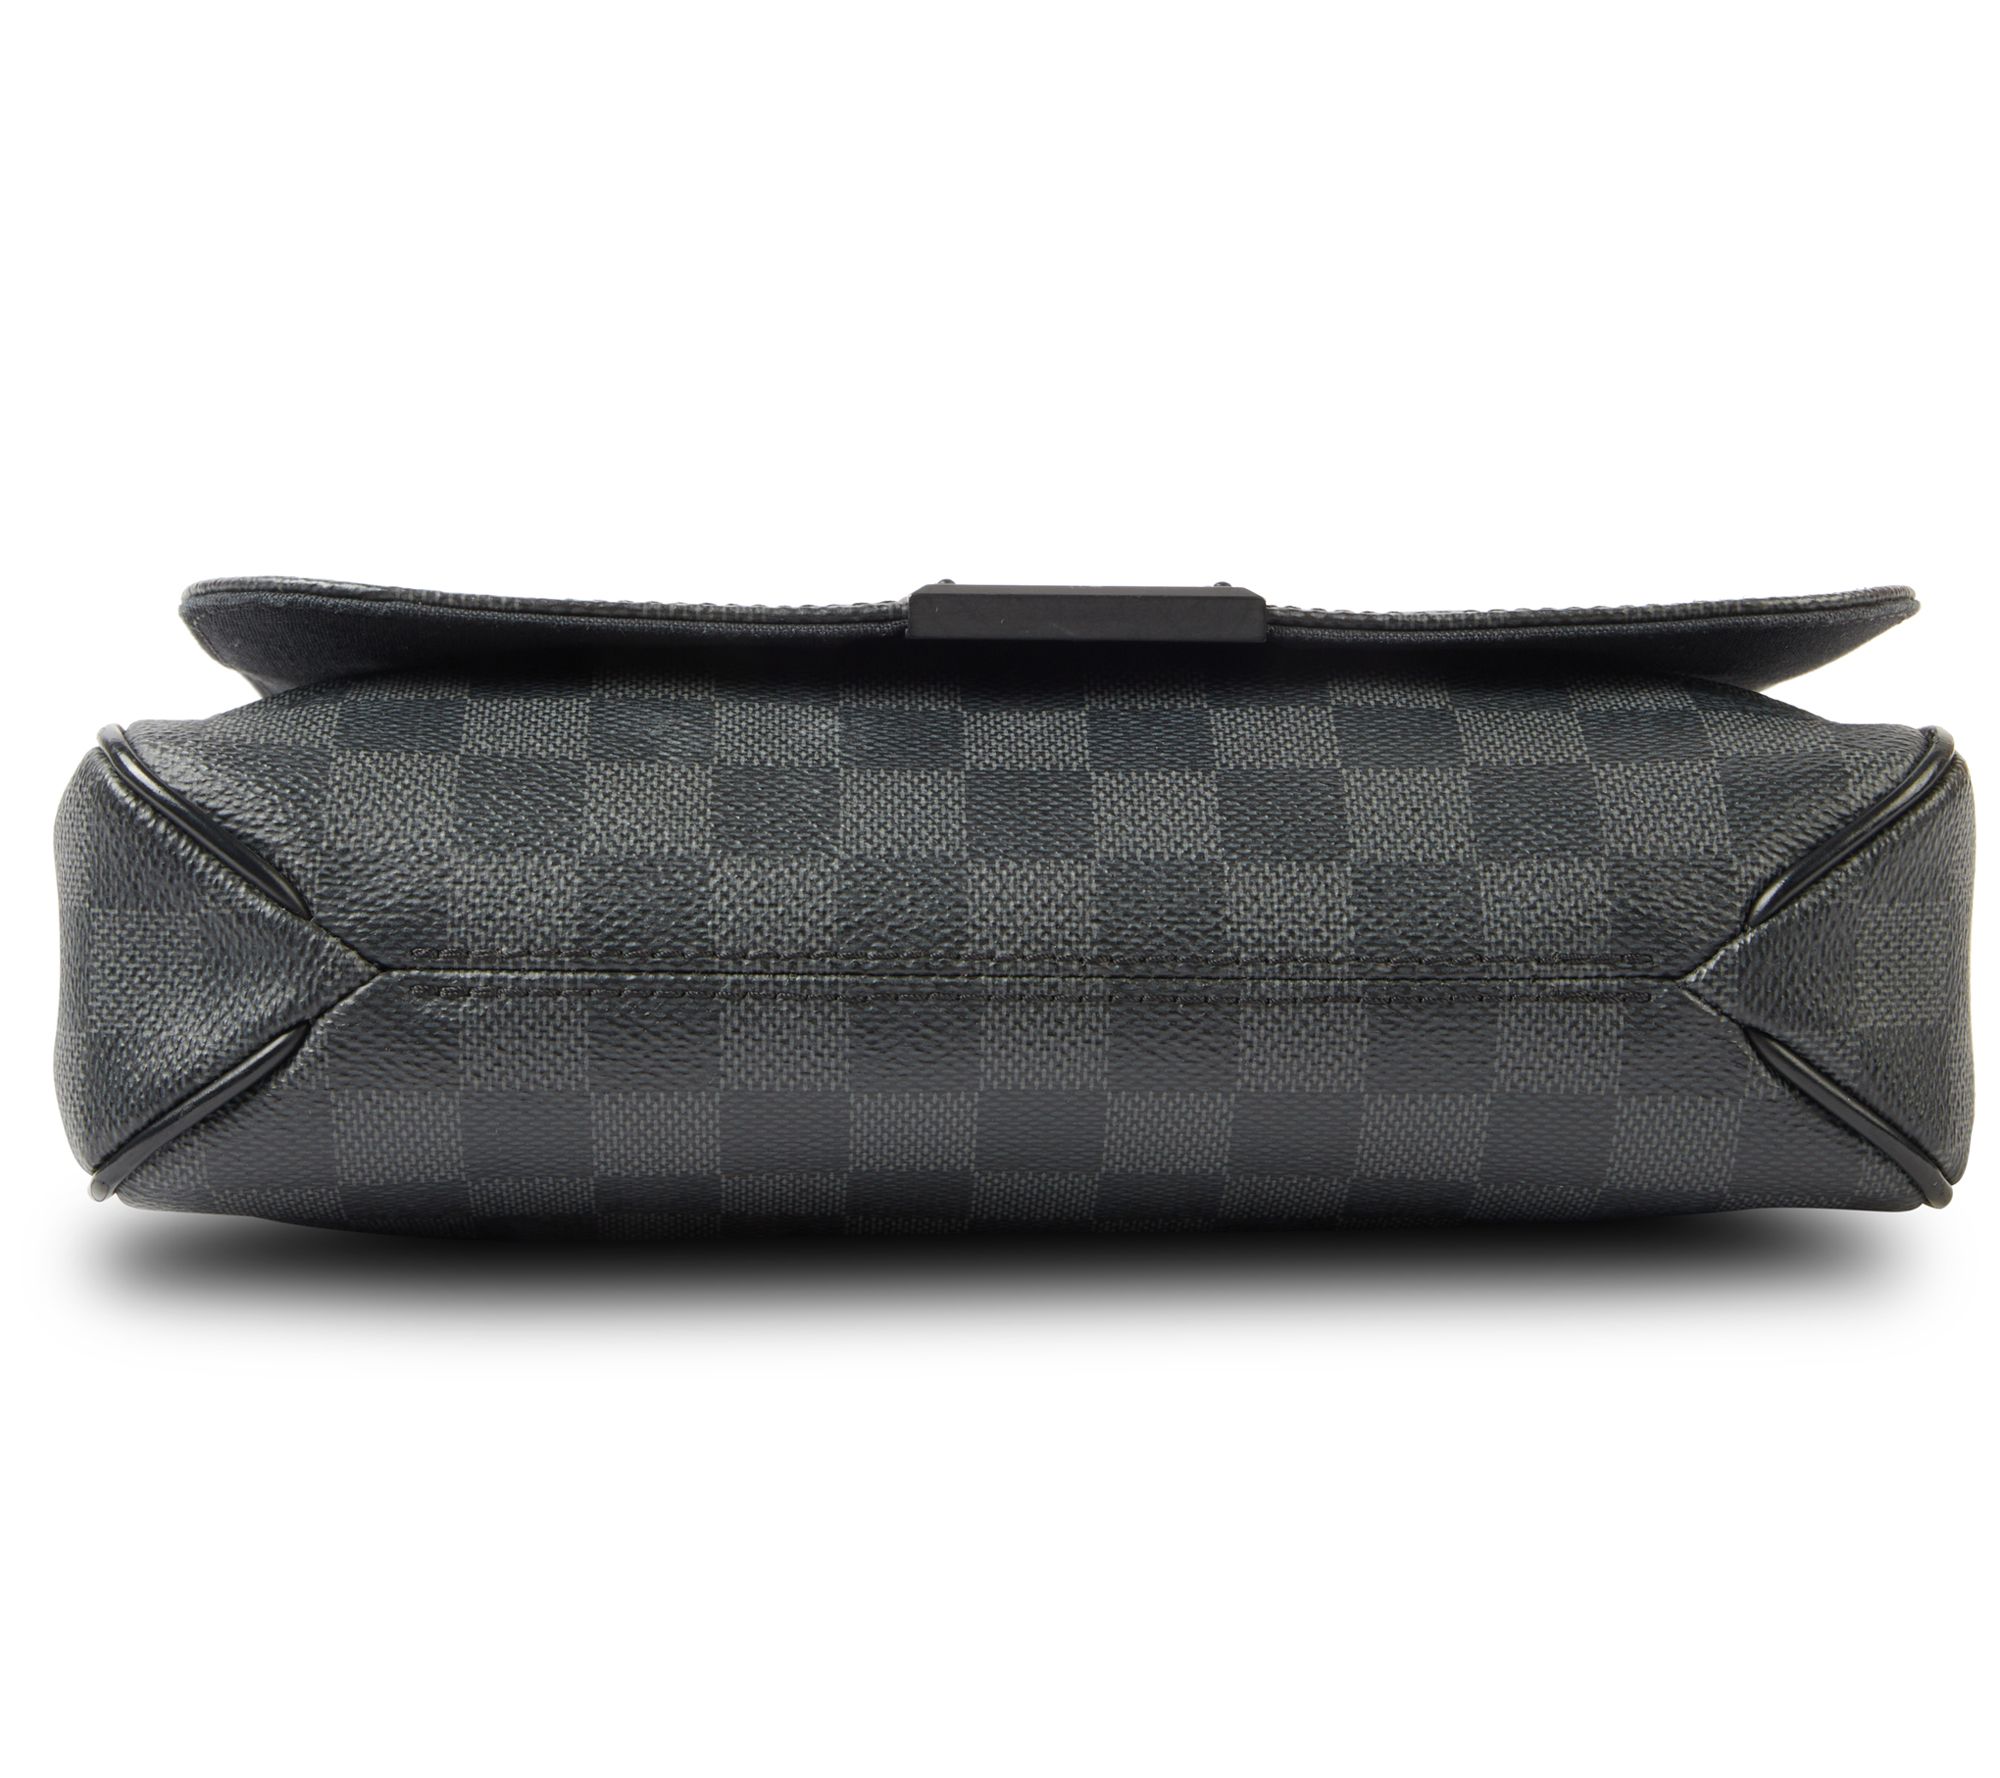 Pre-Owned Louis Vuitton District PM Damier Graphite Shoulder Bag - Pristine  Condition 